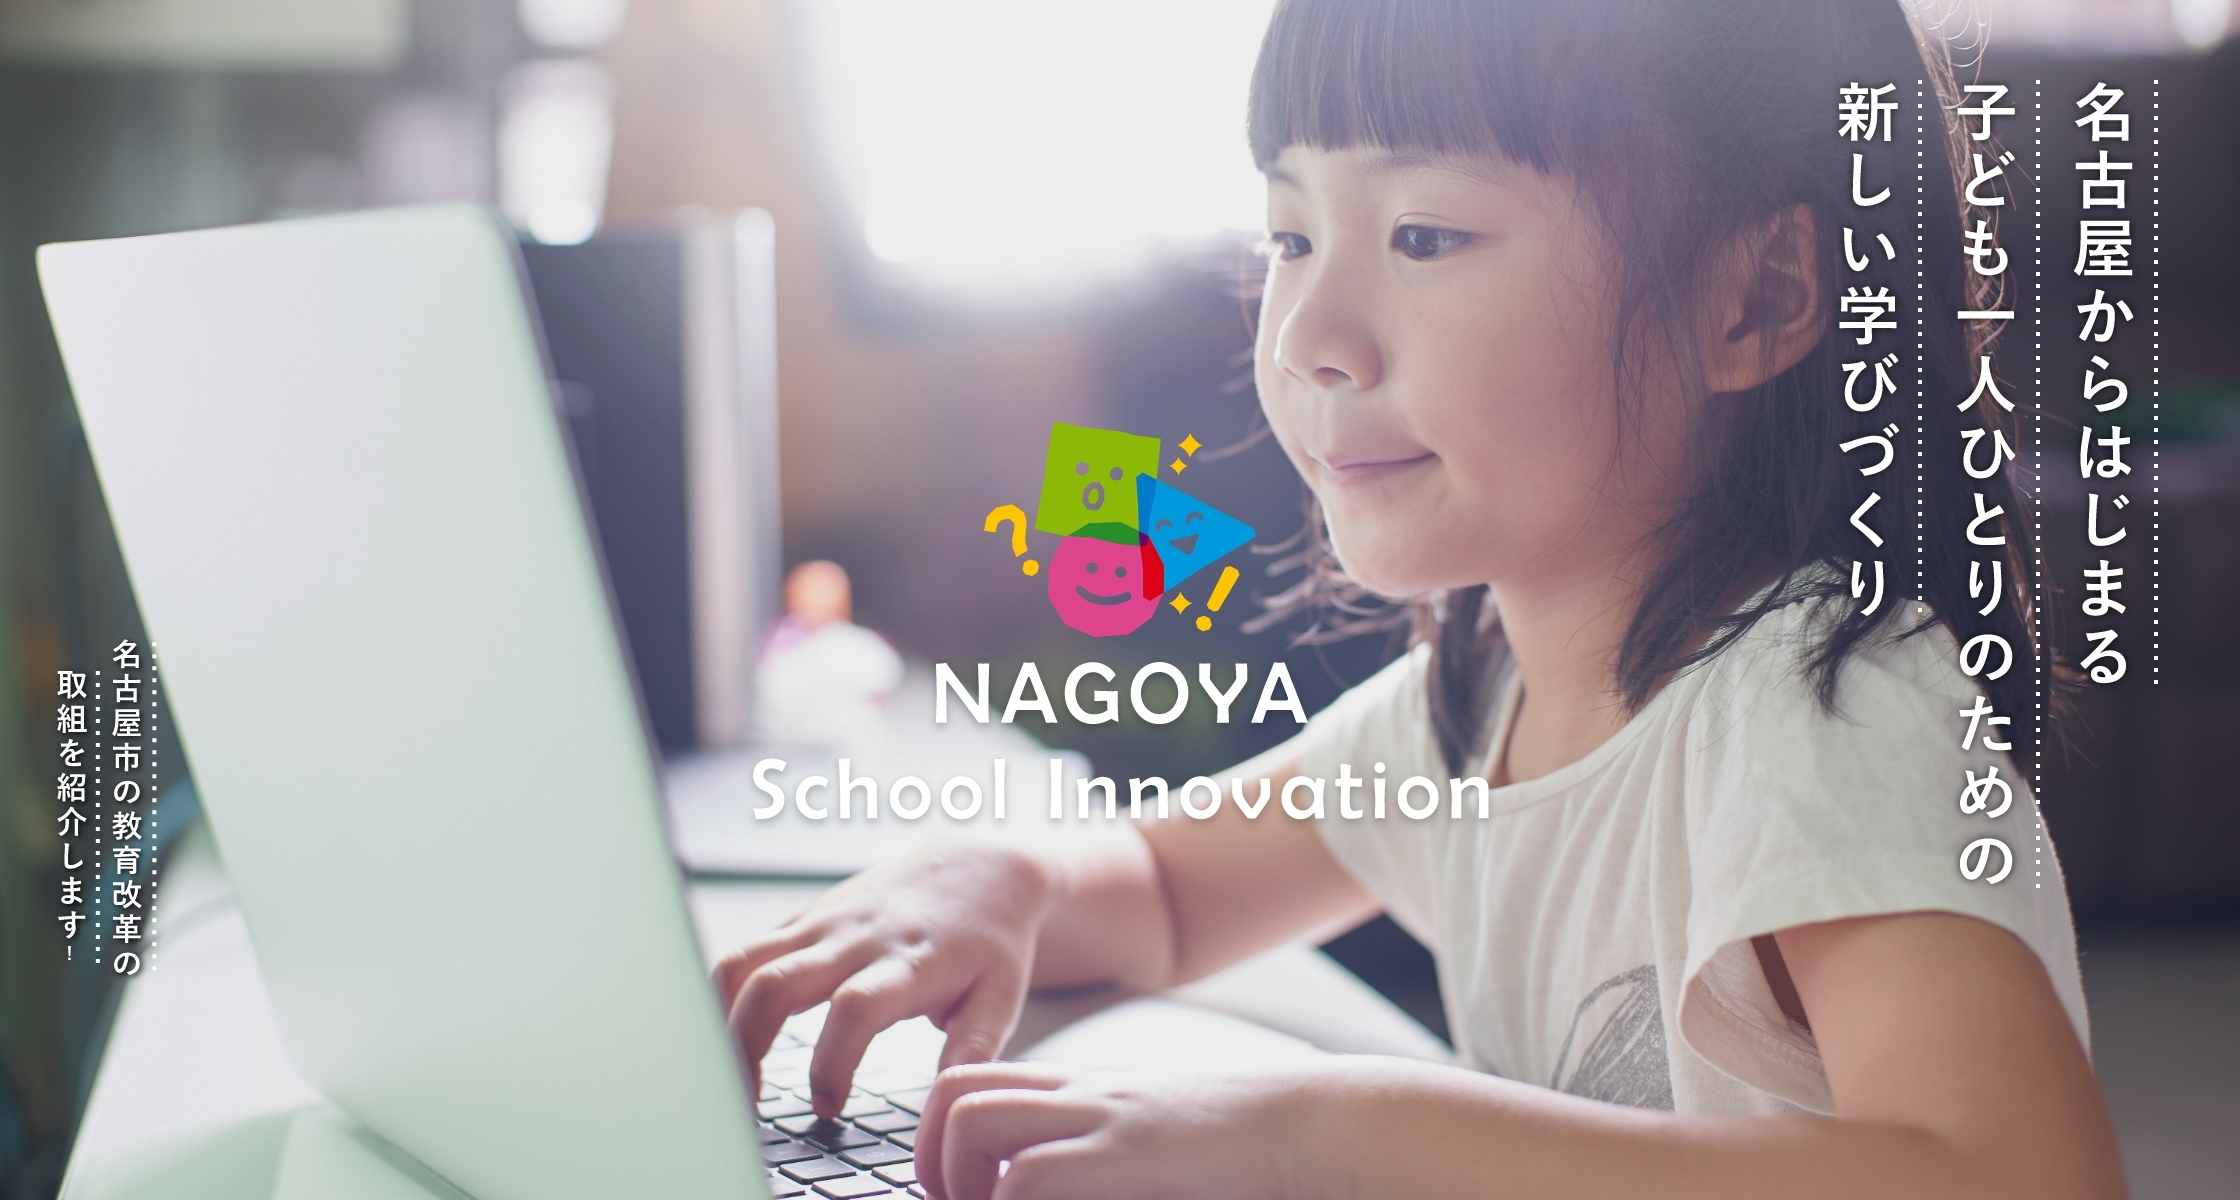 NAGOYA School Innovation 名古屋からはじまる子供一人ひとりのための新しい学びづくり 名古屋市の教育改革の取り組みを紹介します！